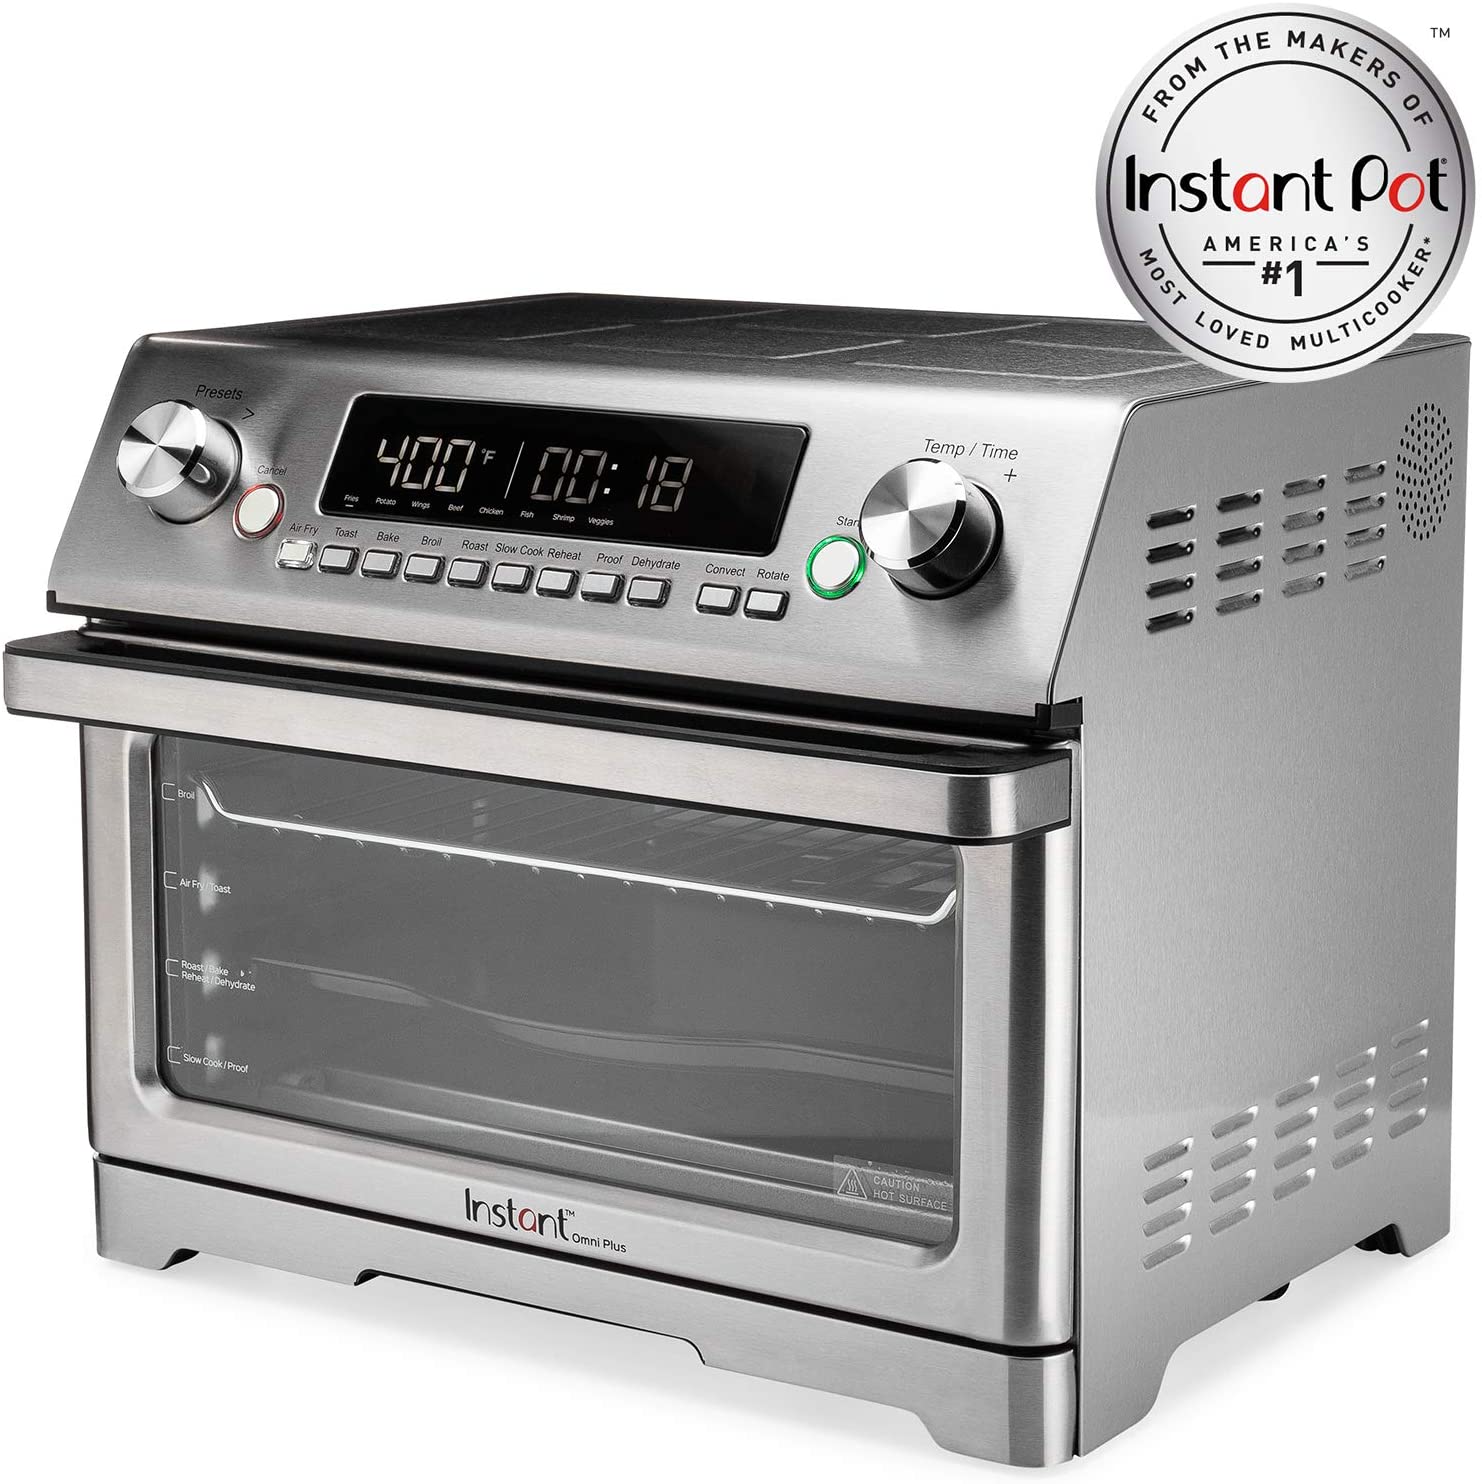 instant omni plus air fryer toaster oven amazon promo code